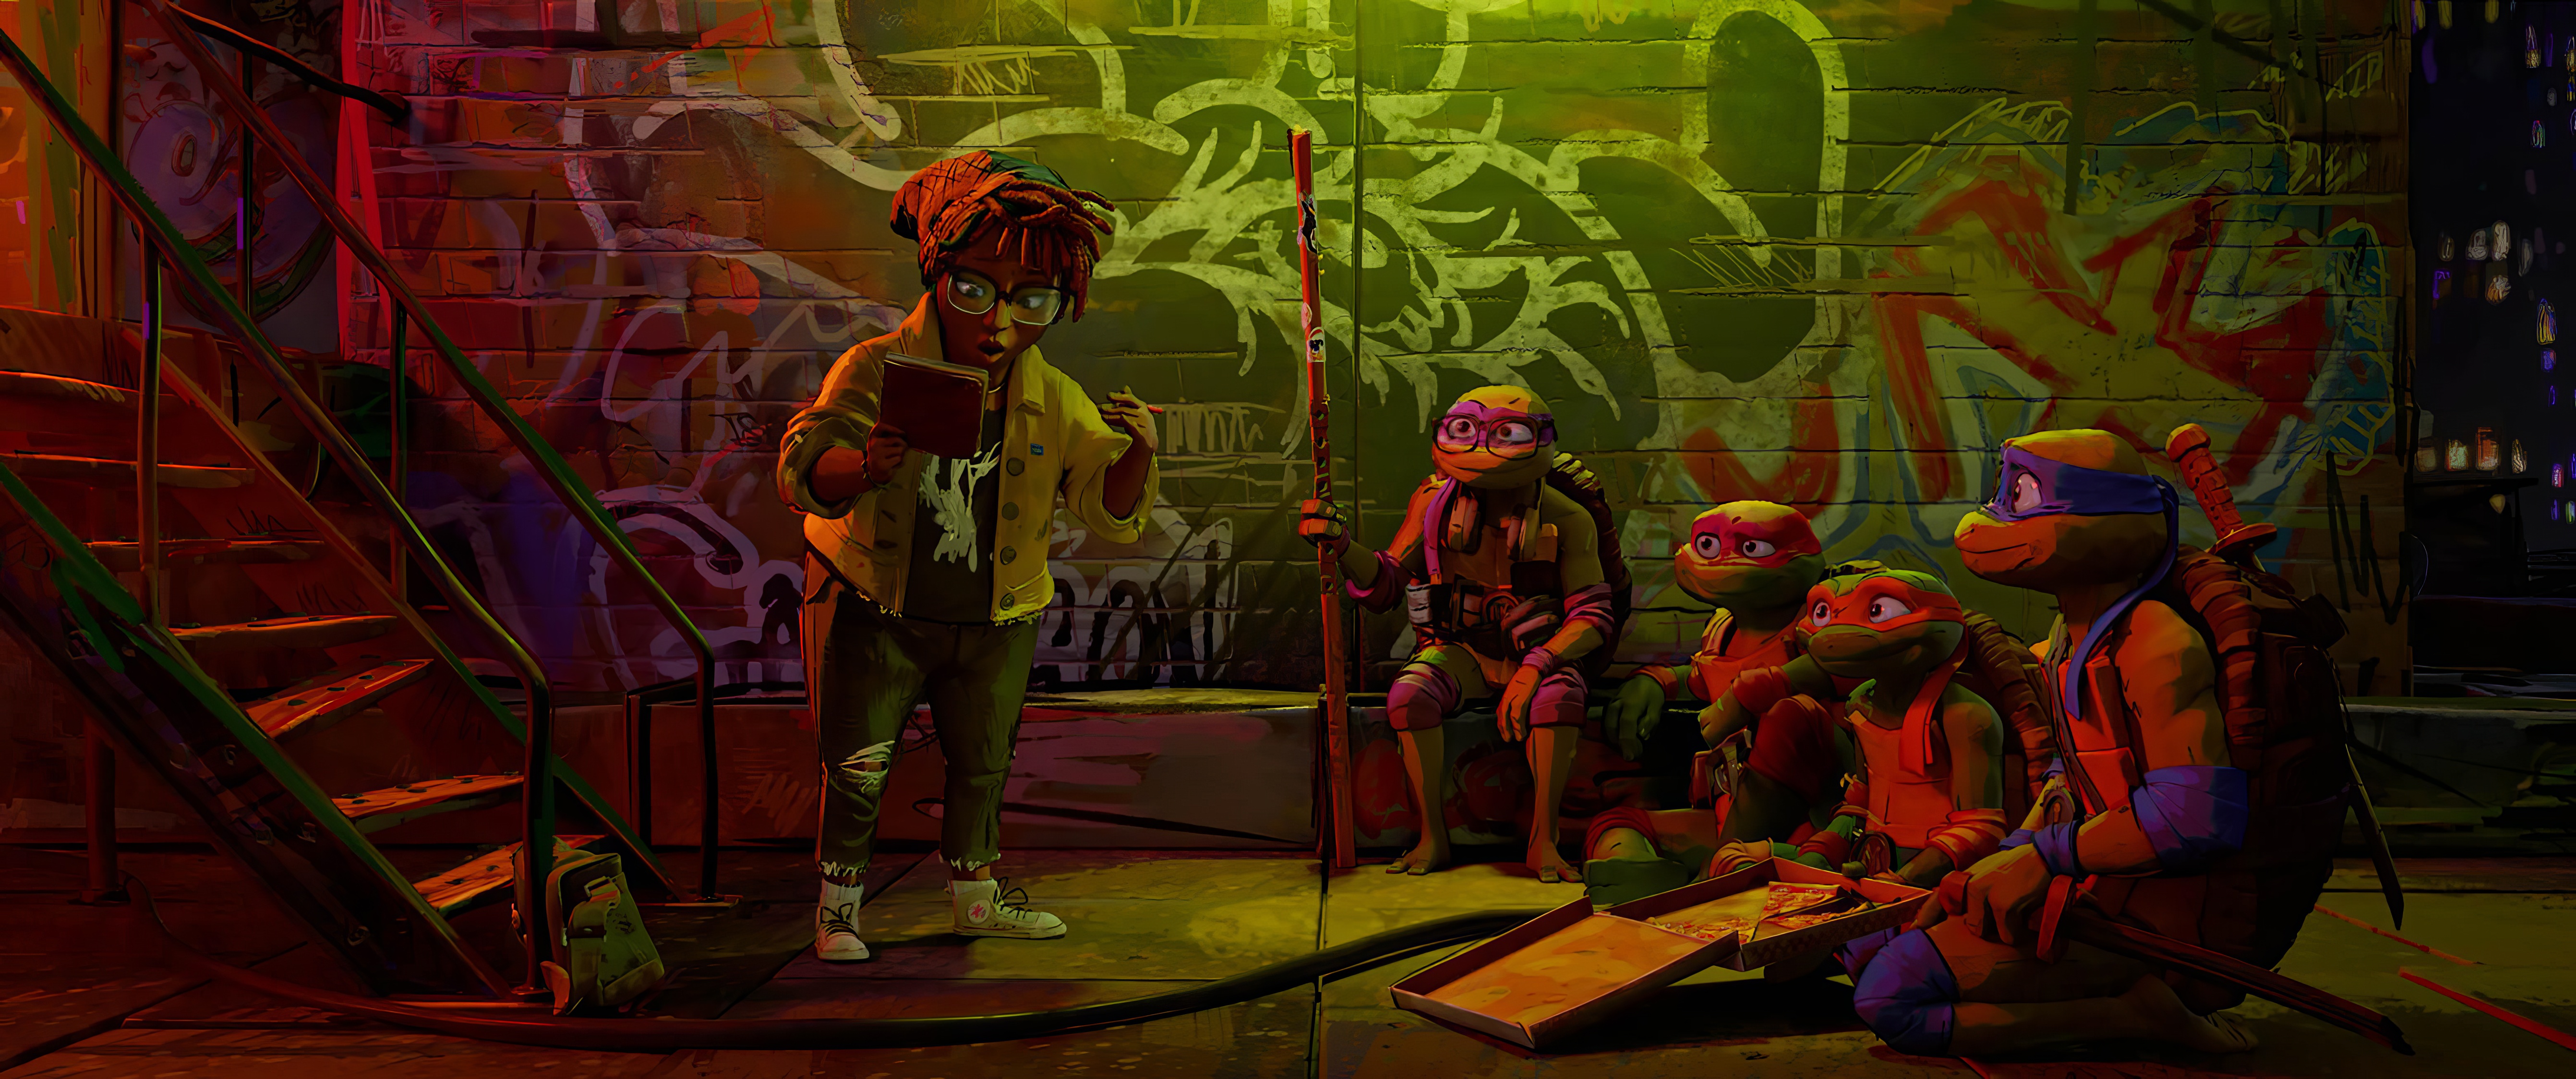 HD Teenage Mutant Ninja Turtles: Mutant Mayhem wallpaper featuring the characters in a vibrant, graffiti-filled scene, perfect for desktop backgrounds.